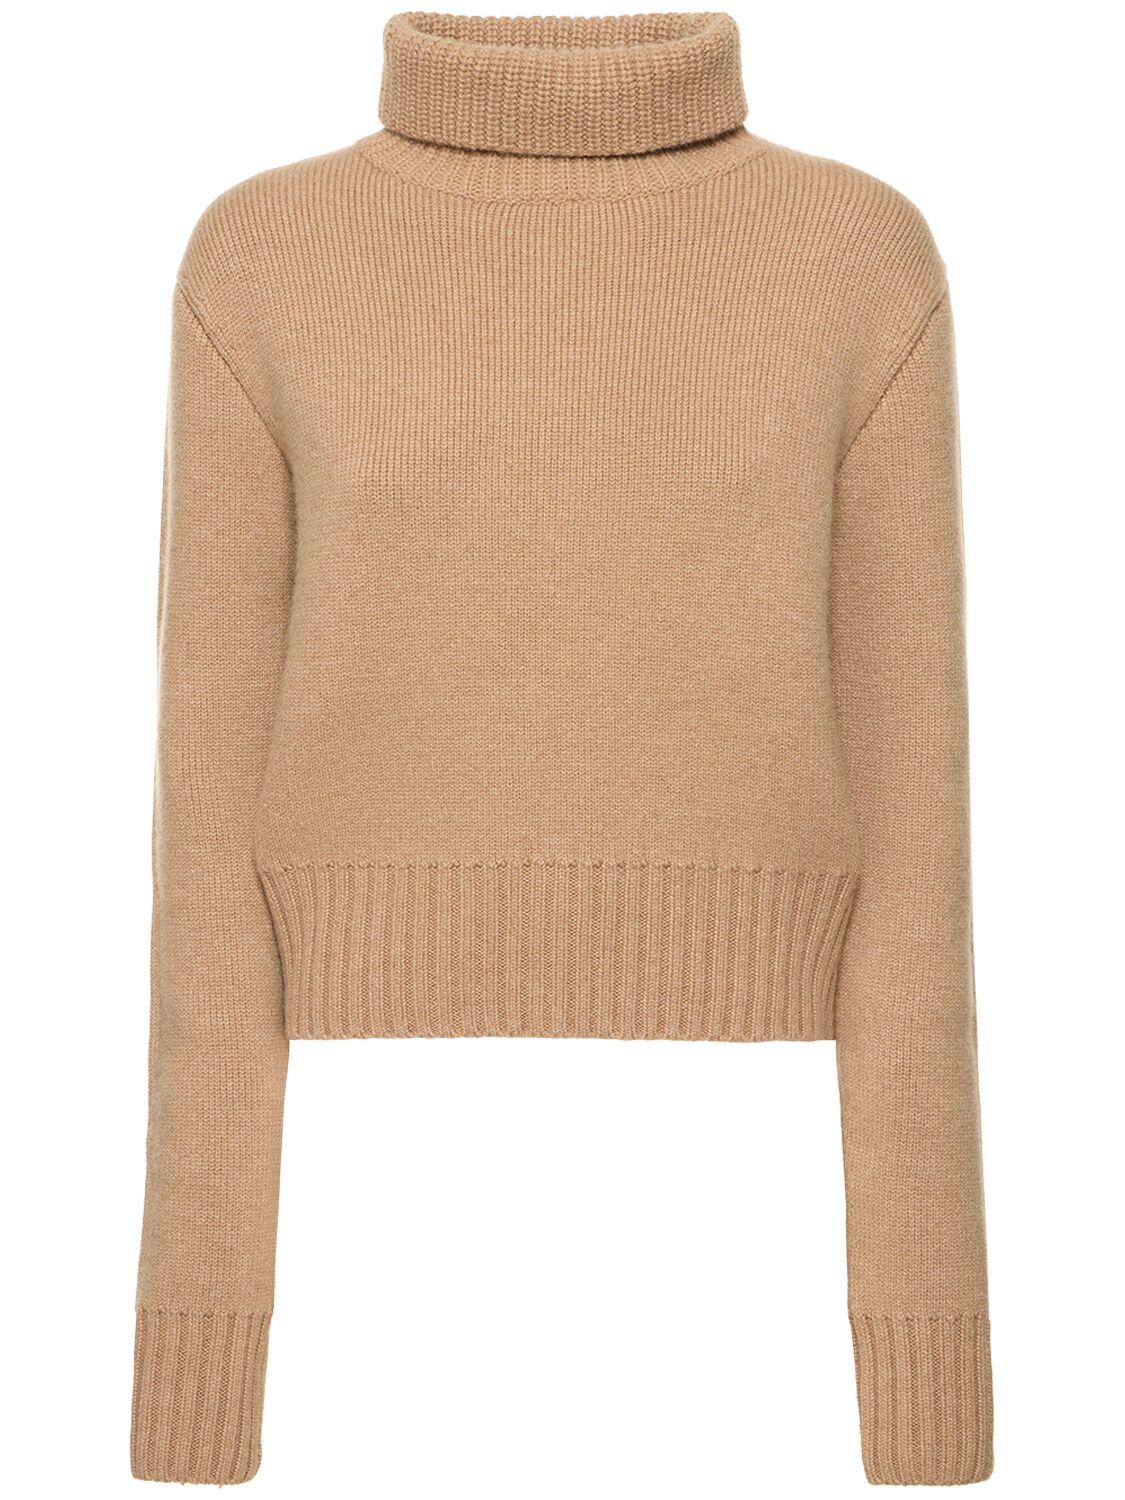 Jovie Cashmere Turtleneck Sweater